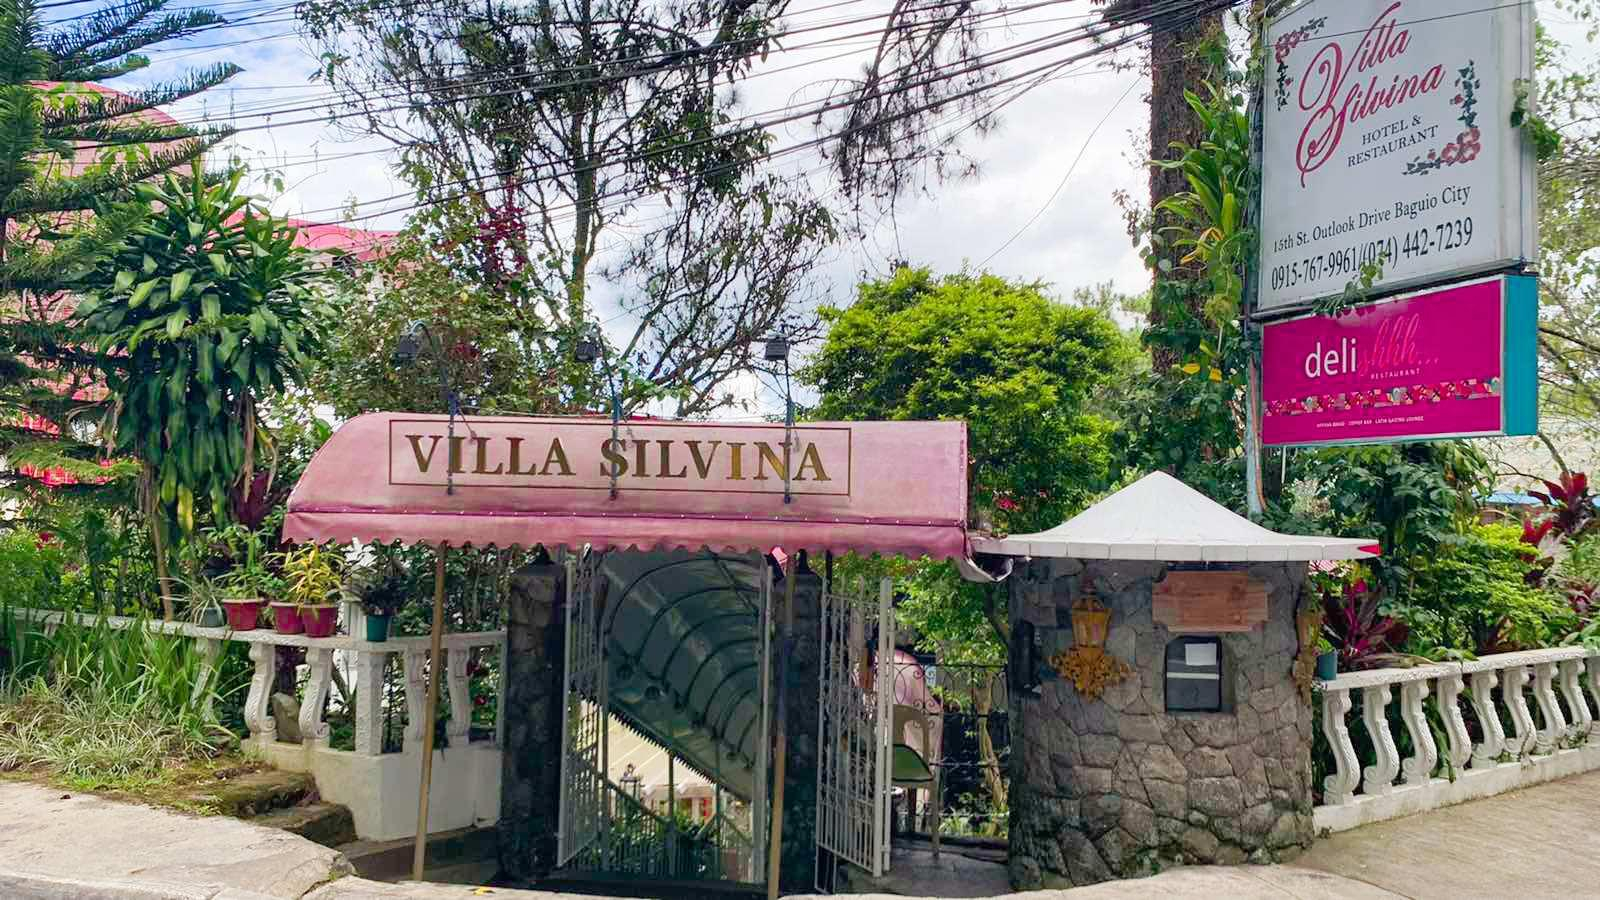 Villa Silvina Hotel and Restaurant, Baguio City